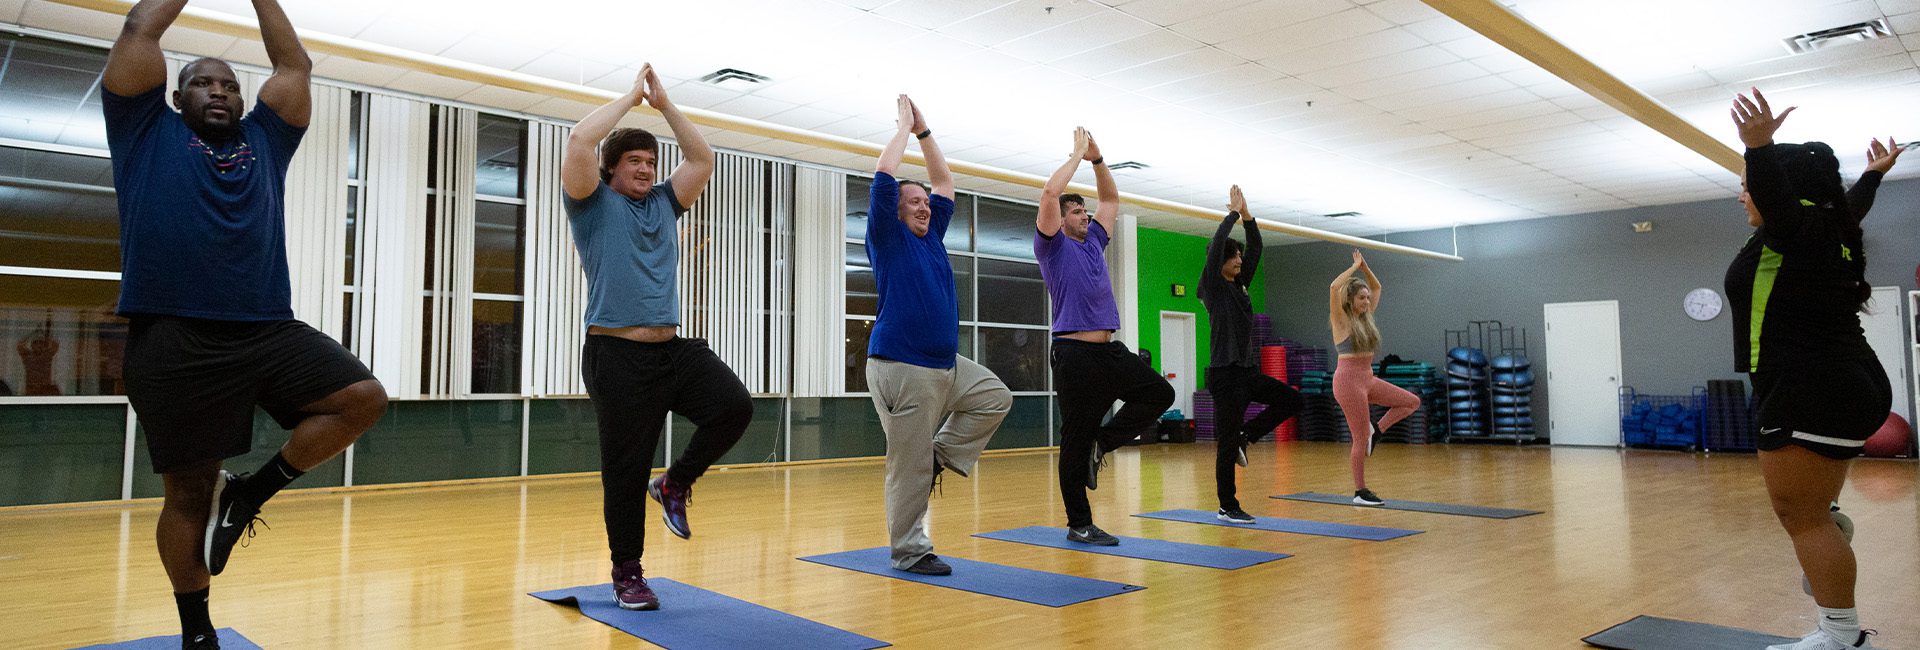 Yoga in Spokane WA  MUV Fitness E Spokane